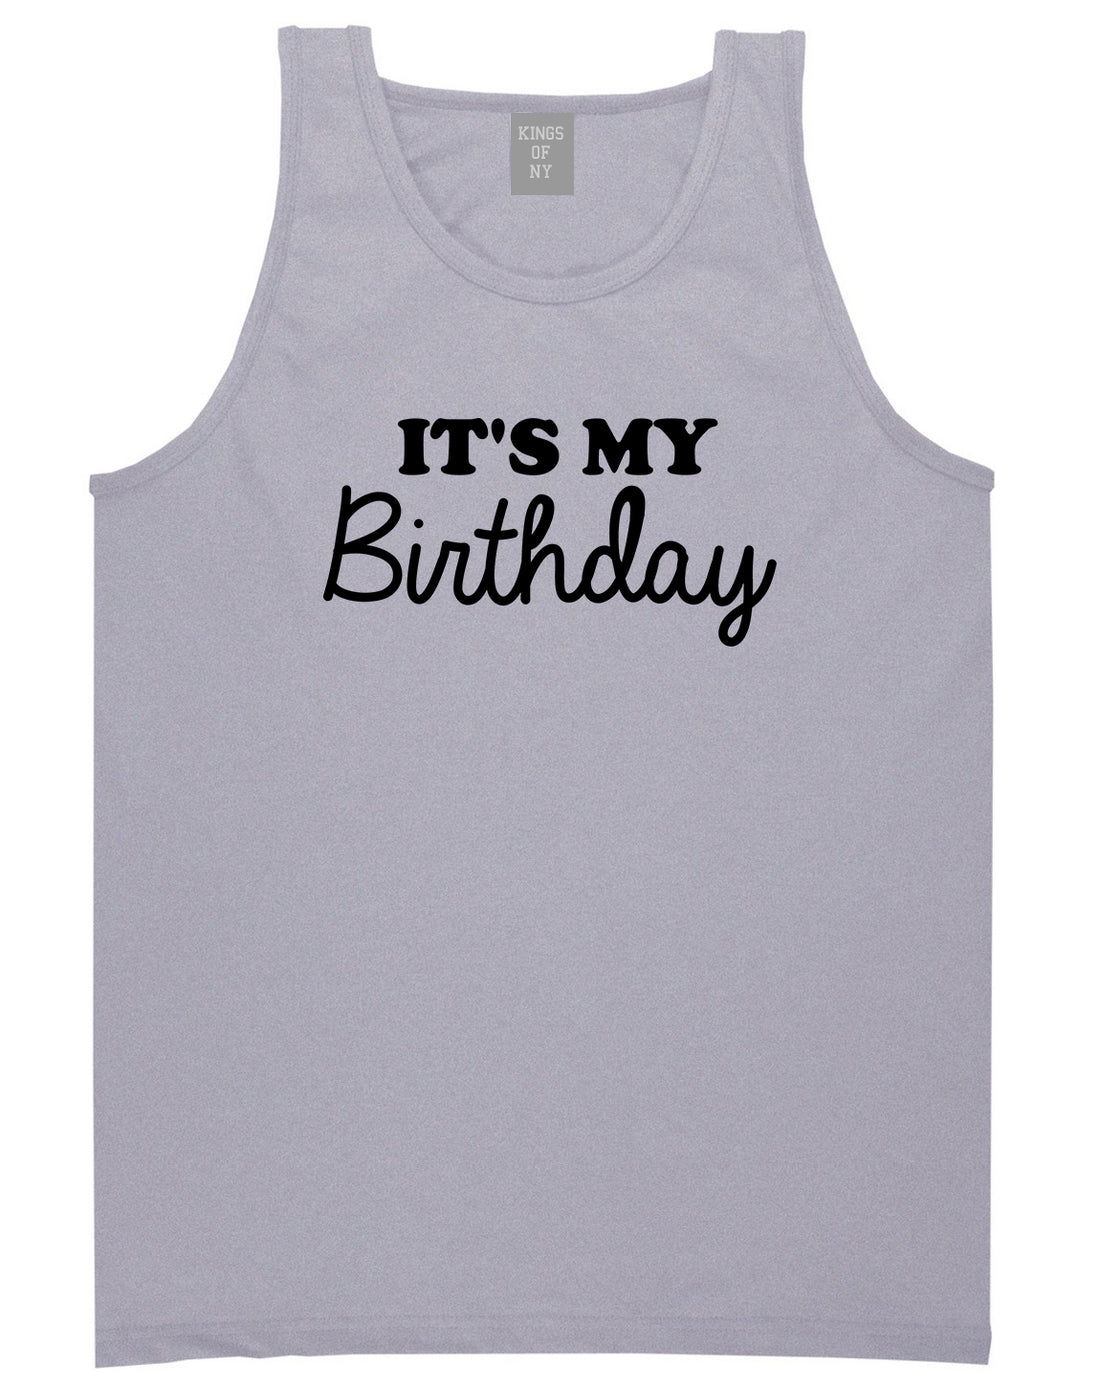 Its My Birthday Mens Tank Top T-Shirt Grey